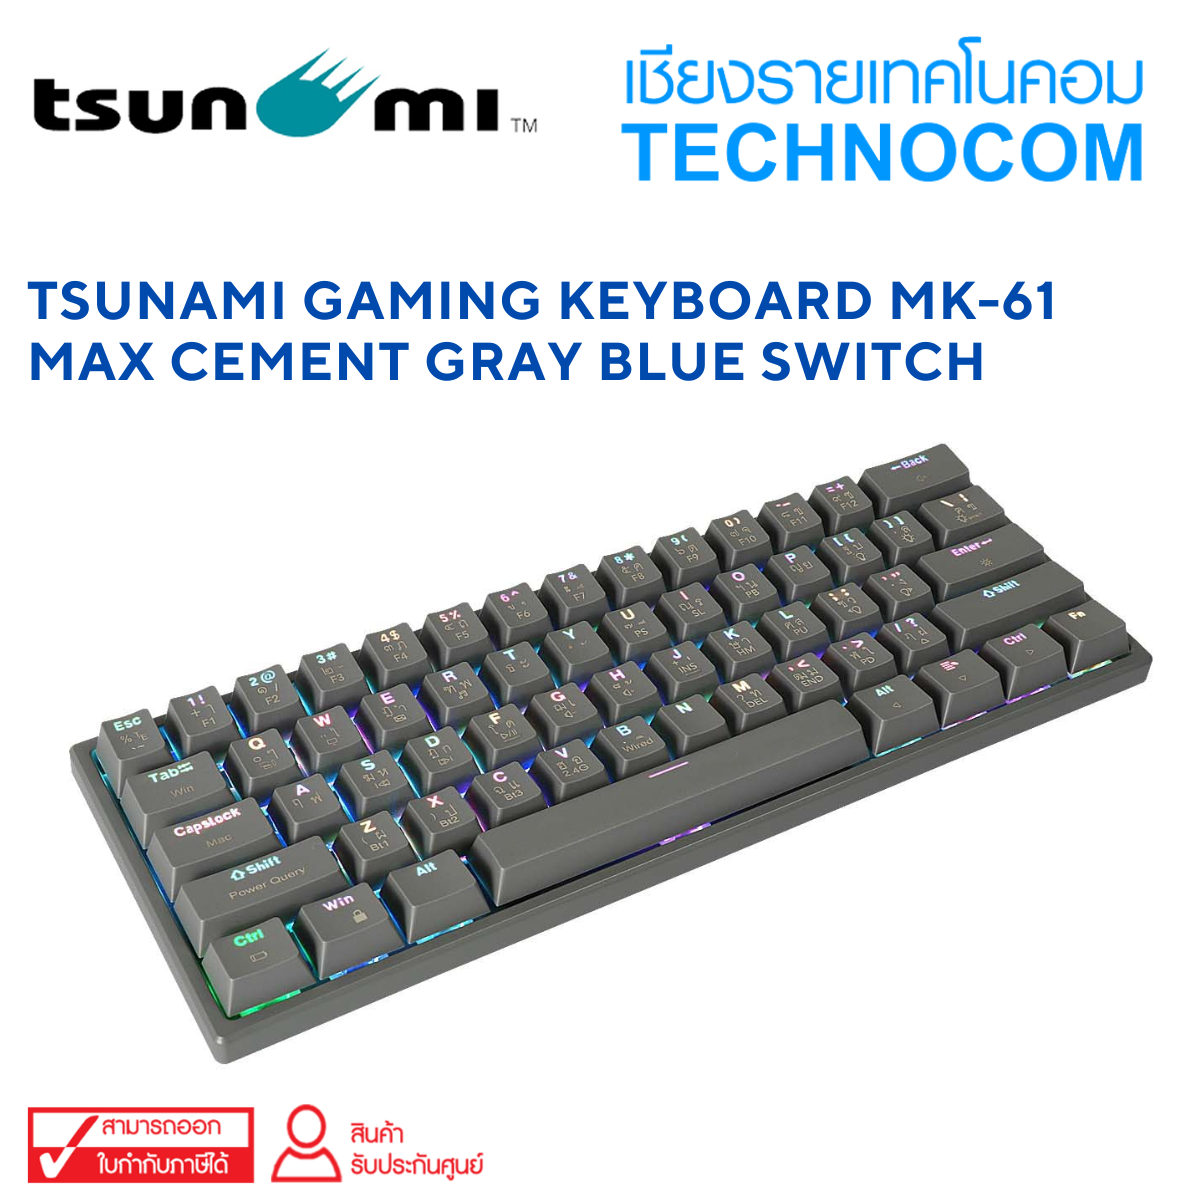 TSUNAMI GAMING KEYBOARD MK-61 MAX CEMENT GRAY BLUE SWITCH